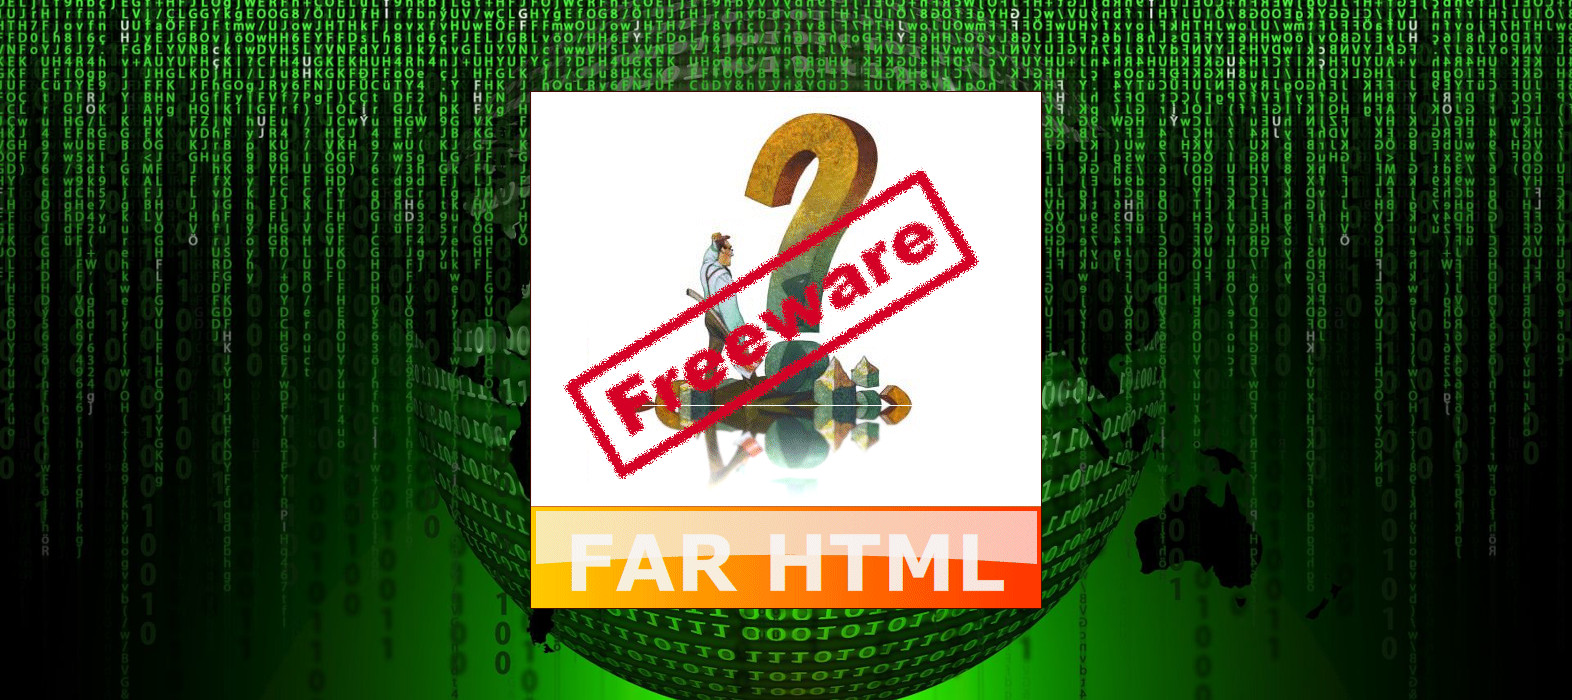 HTMLHelp FAR HTML Download